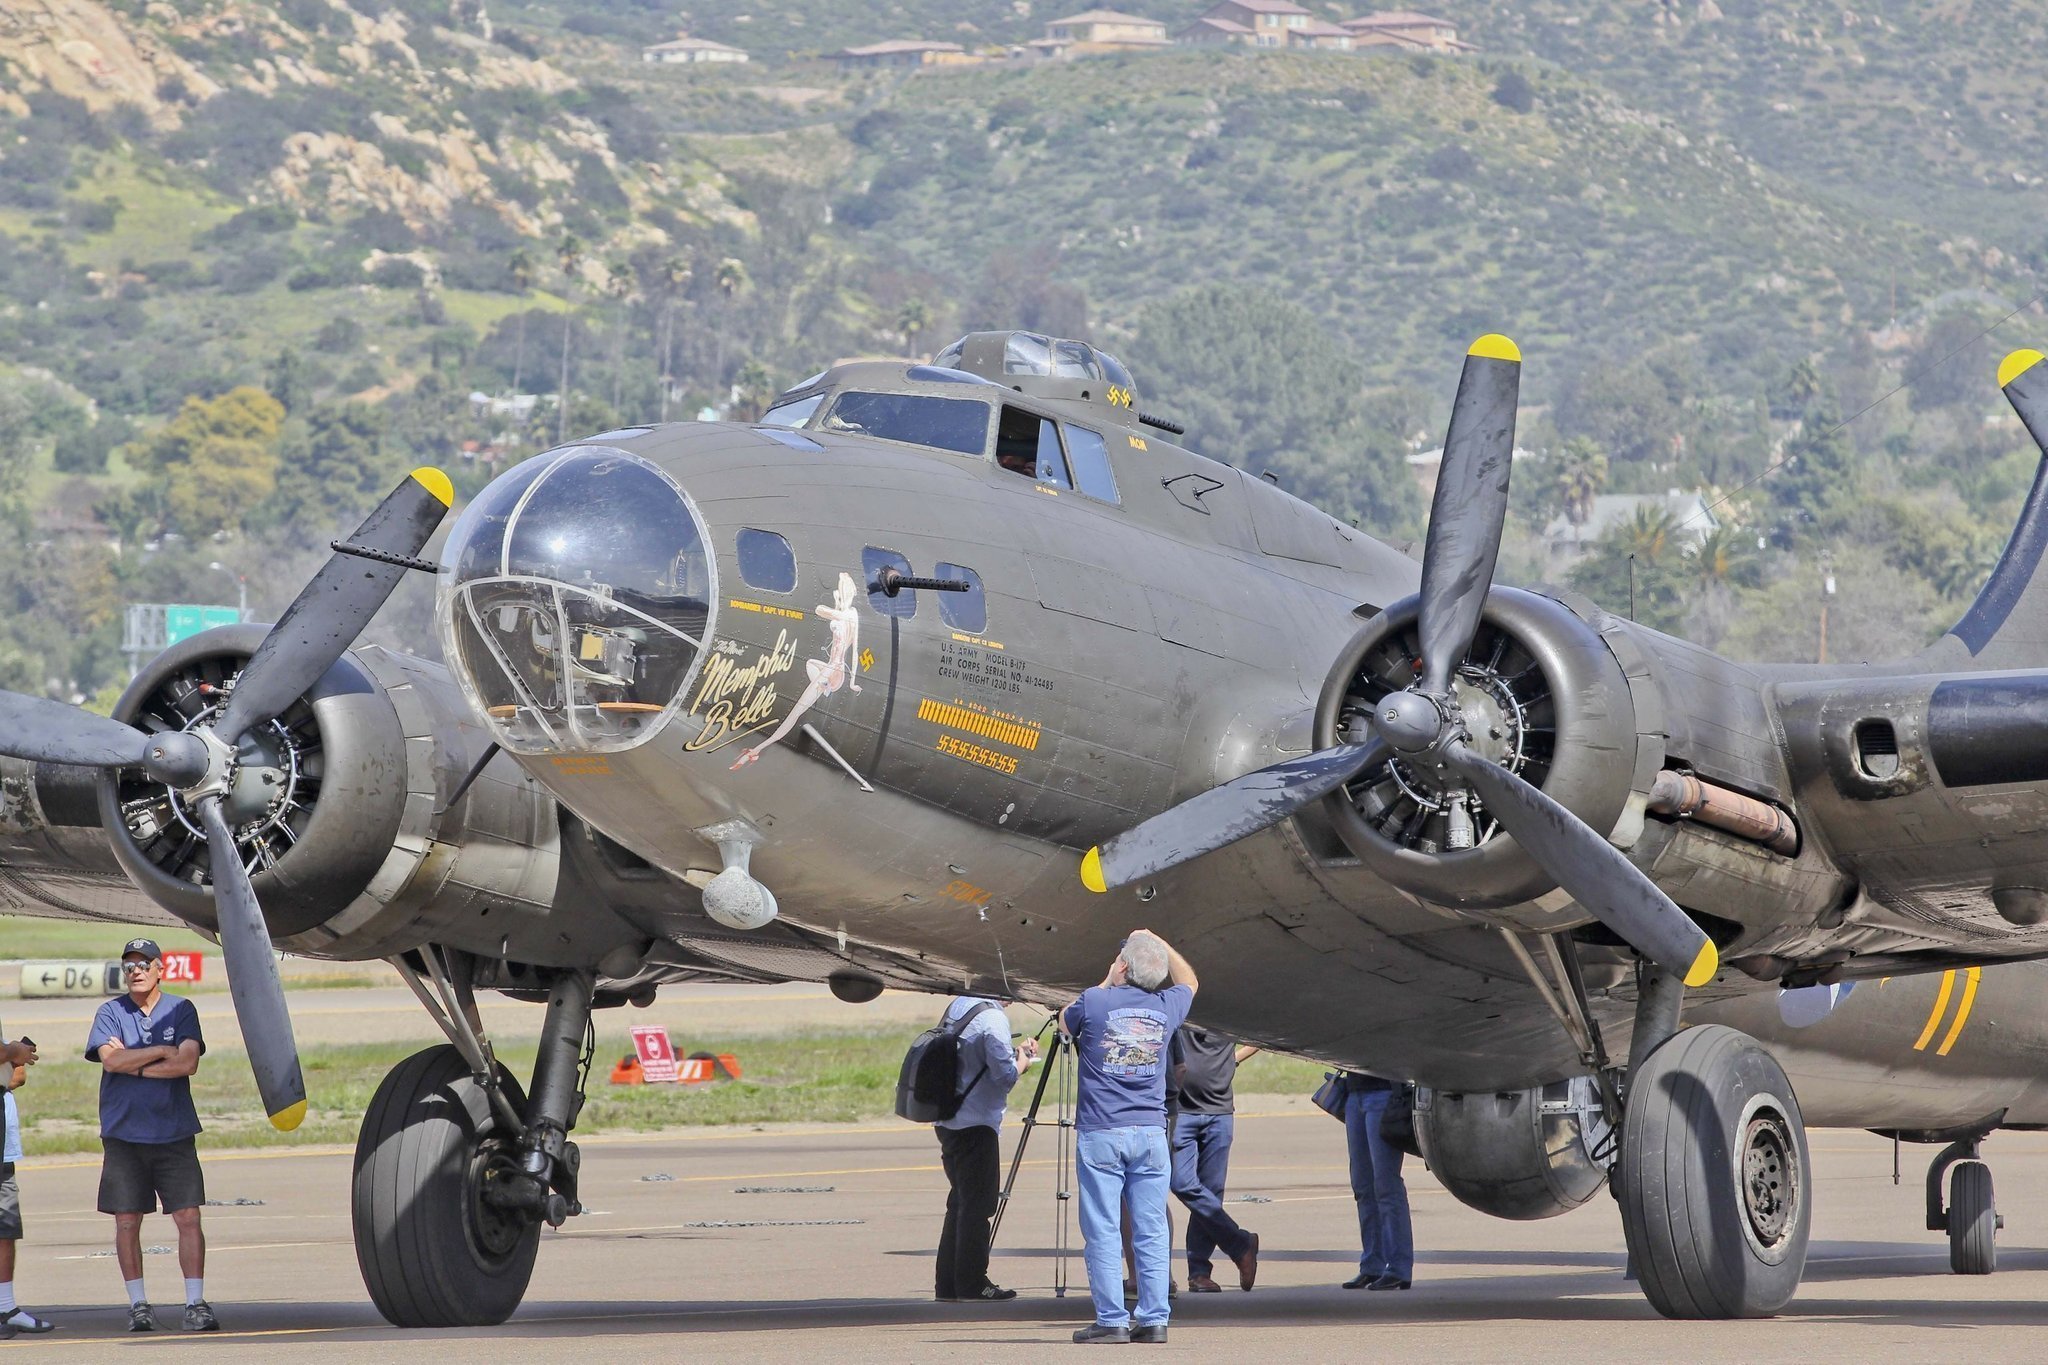 sdut-B-17-bomber-on-display-in-El-Cajon-2013mar19